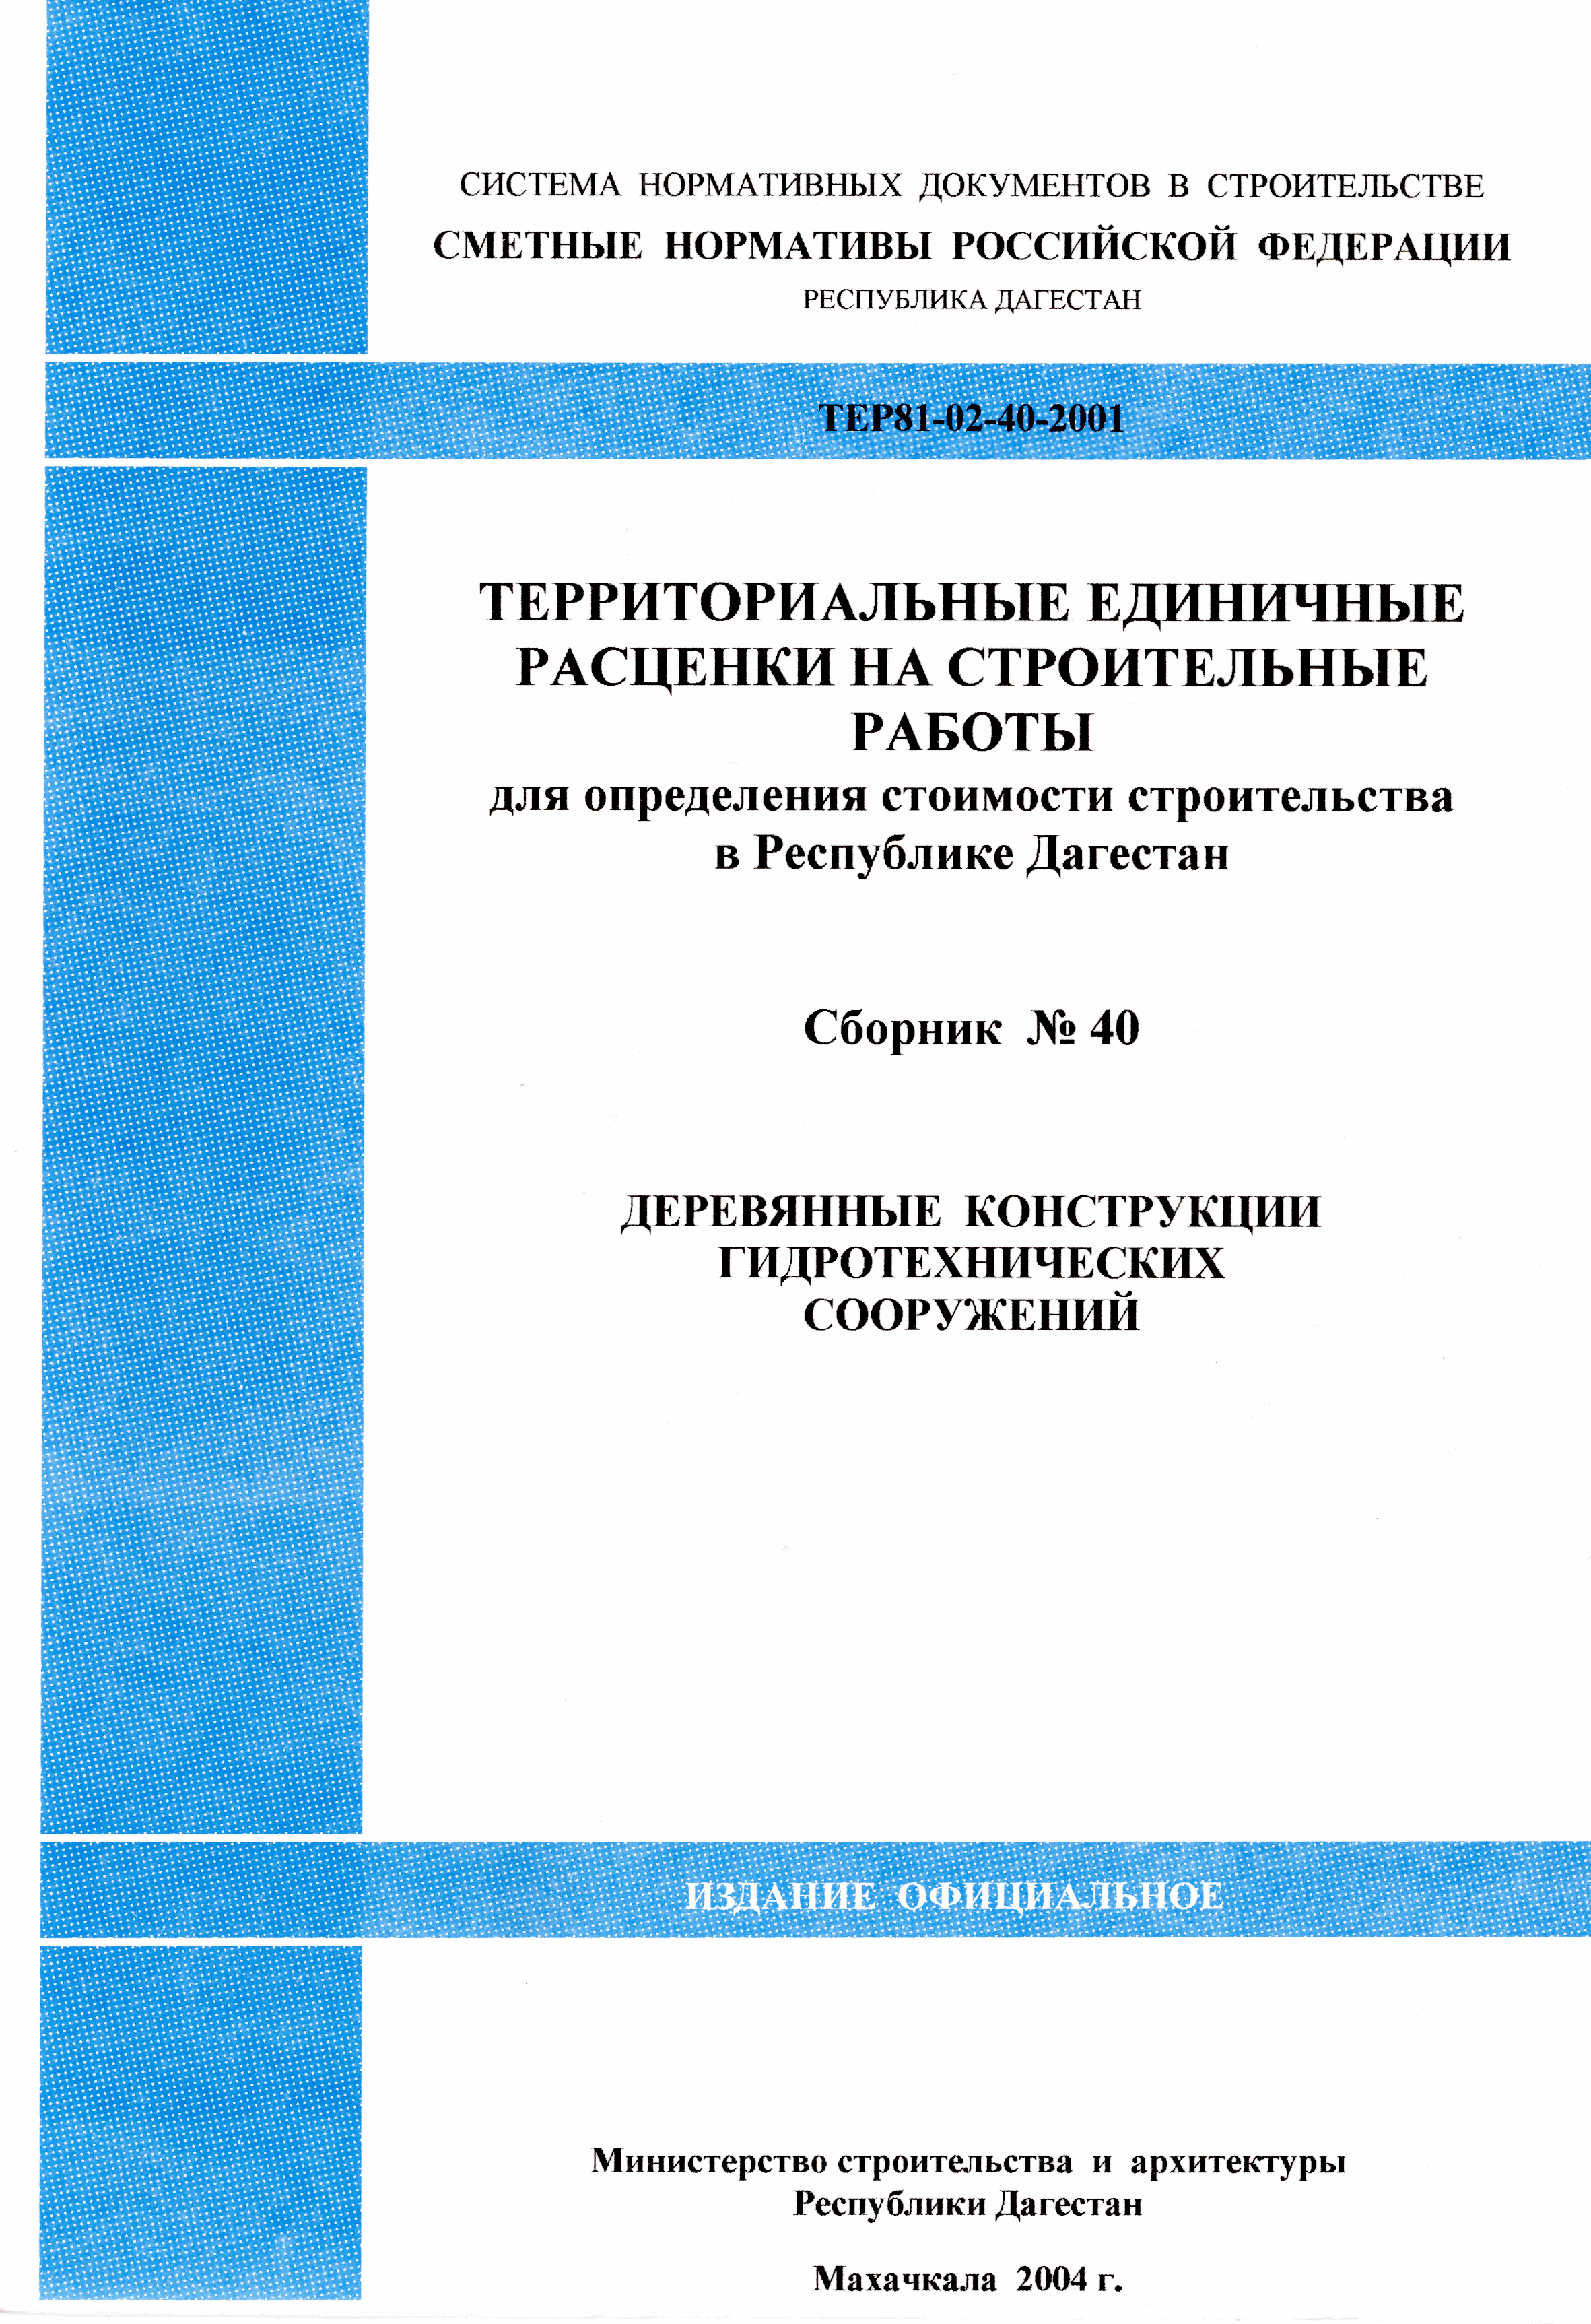 ТЕР Республика Дагестан 2001-40